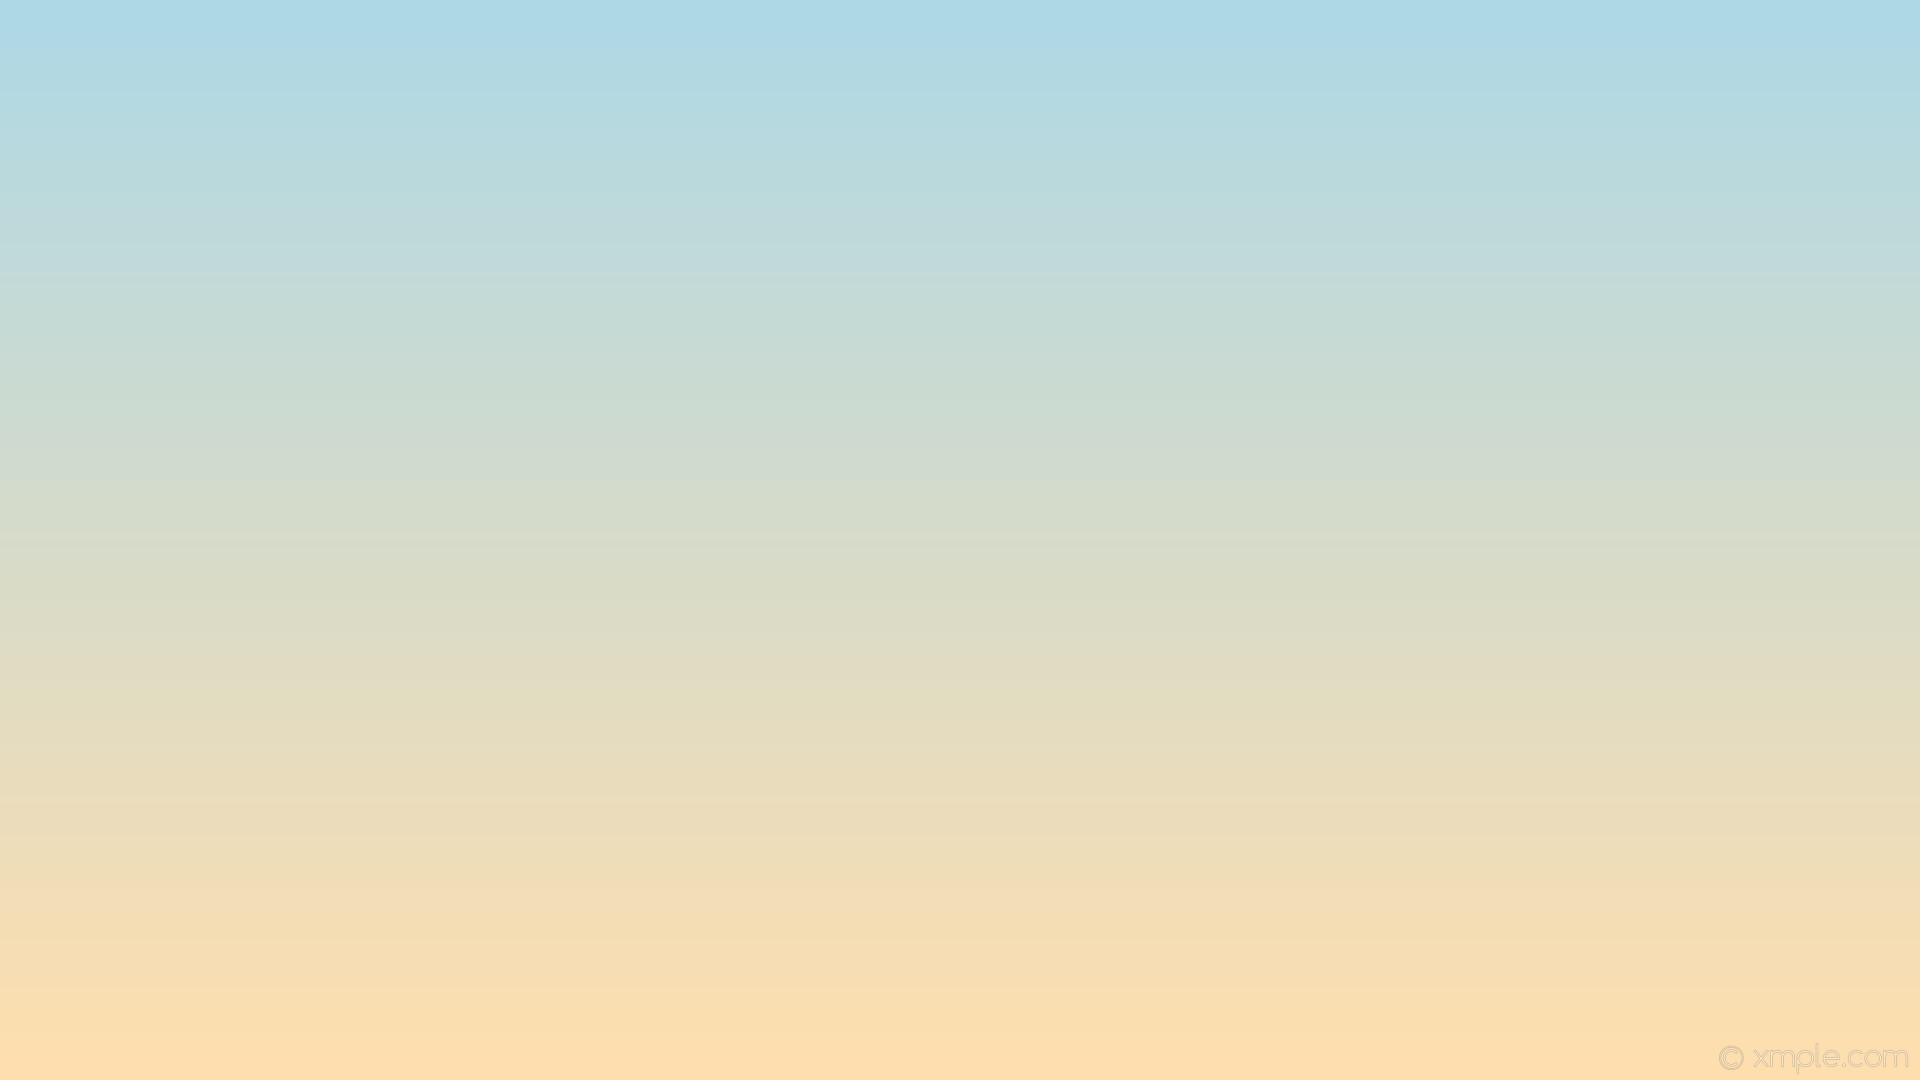 1920x1080 wallpaper brown blue gradient linear light blue navajo white #add8e6  #ffdead 90Â°